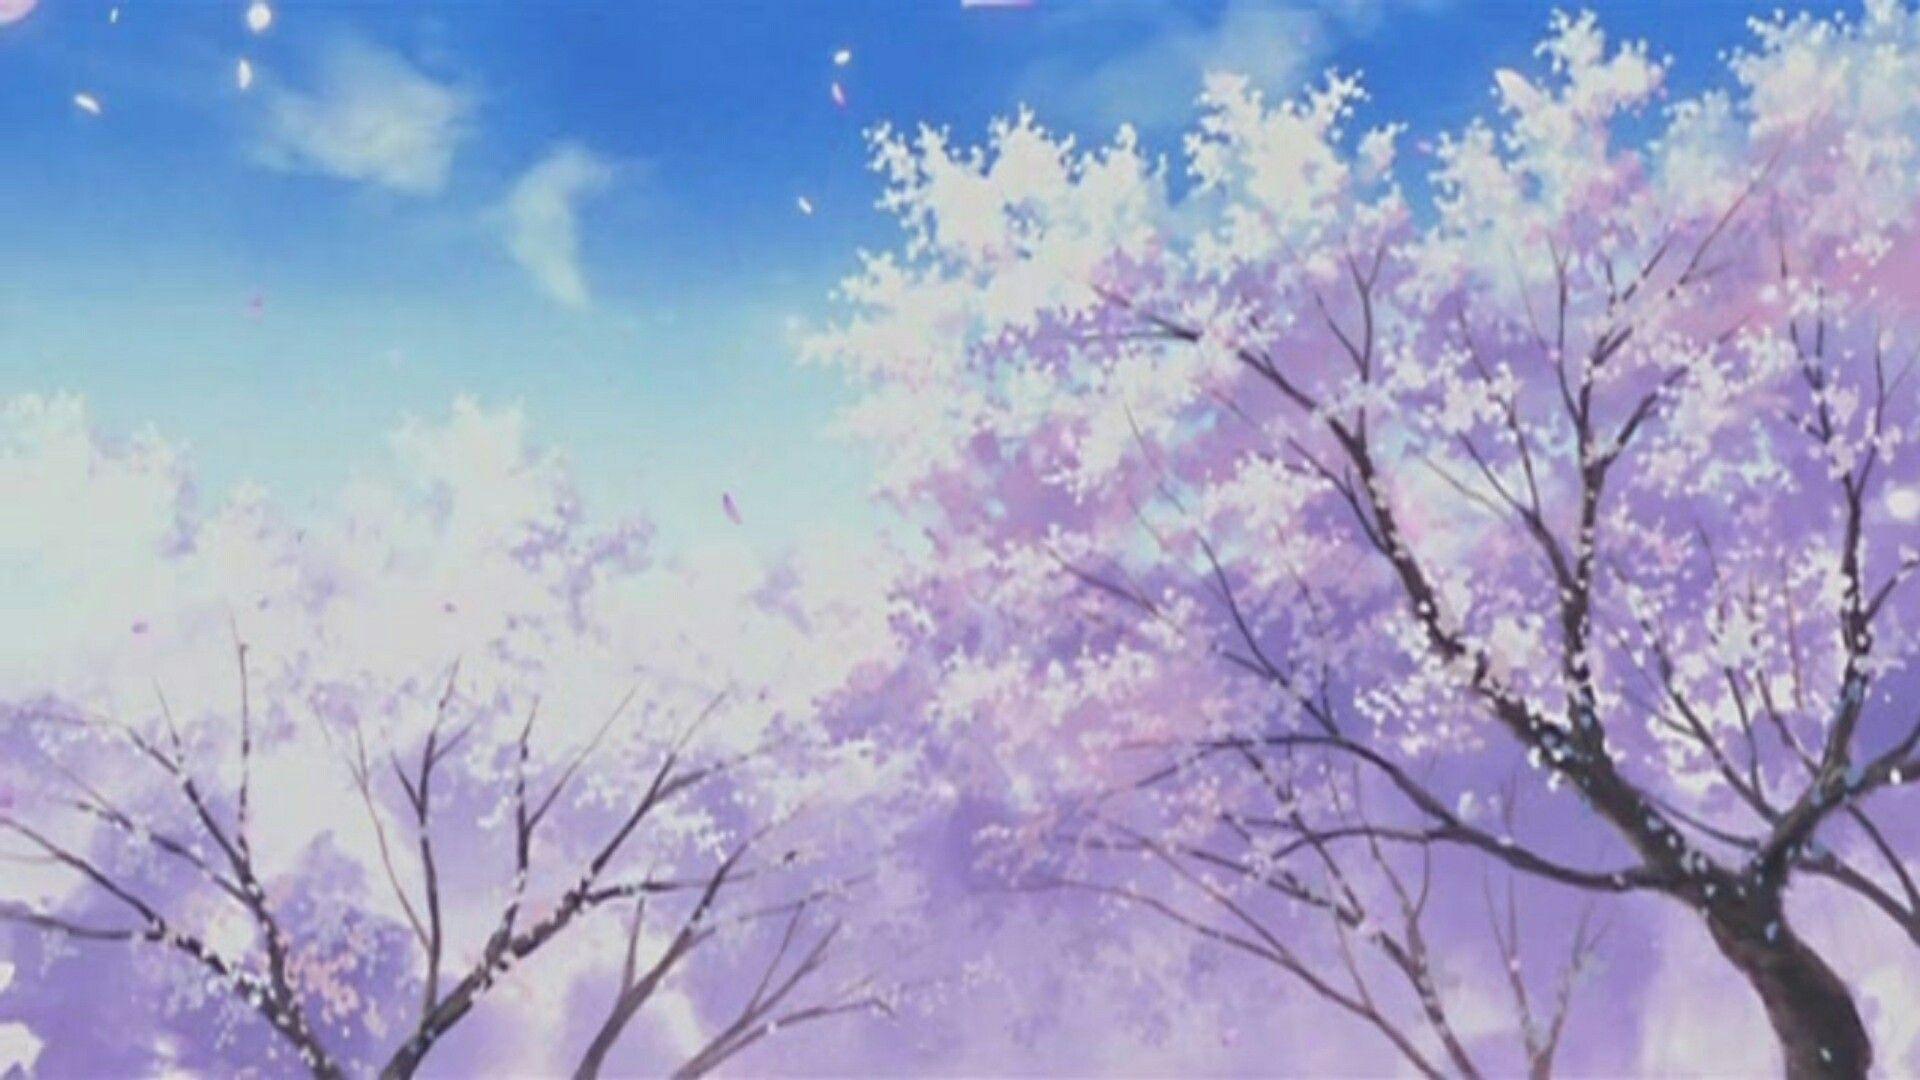 The Nature of Anime #Nature #anime #sky #Wallpaper #kawaii